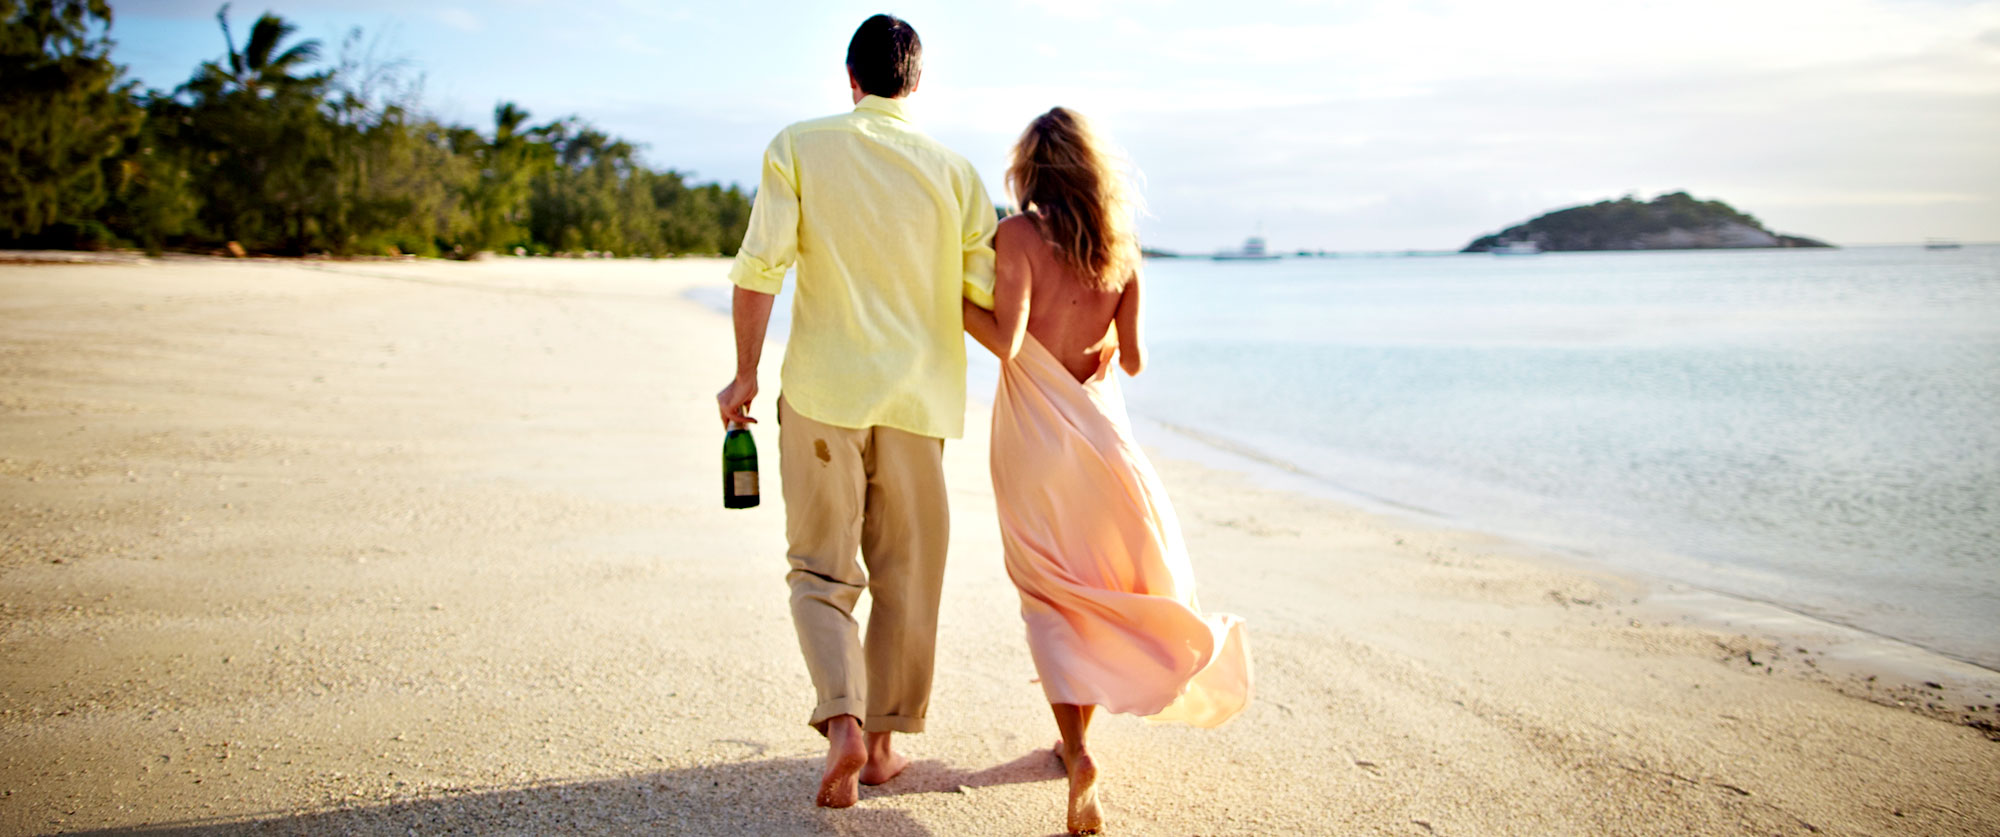 Australia Honeymoon Package - Lizard Island Resort